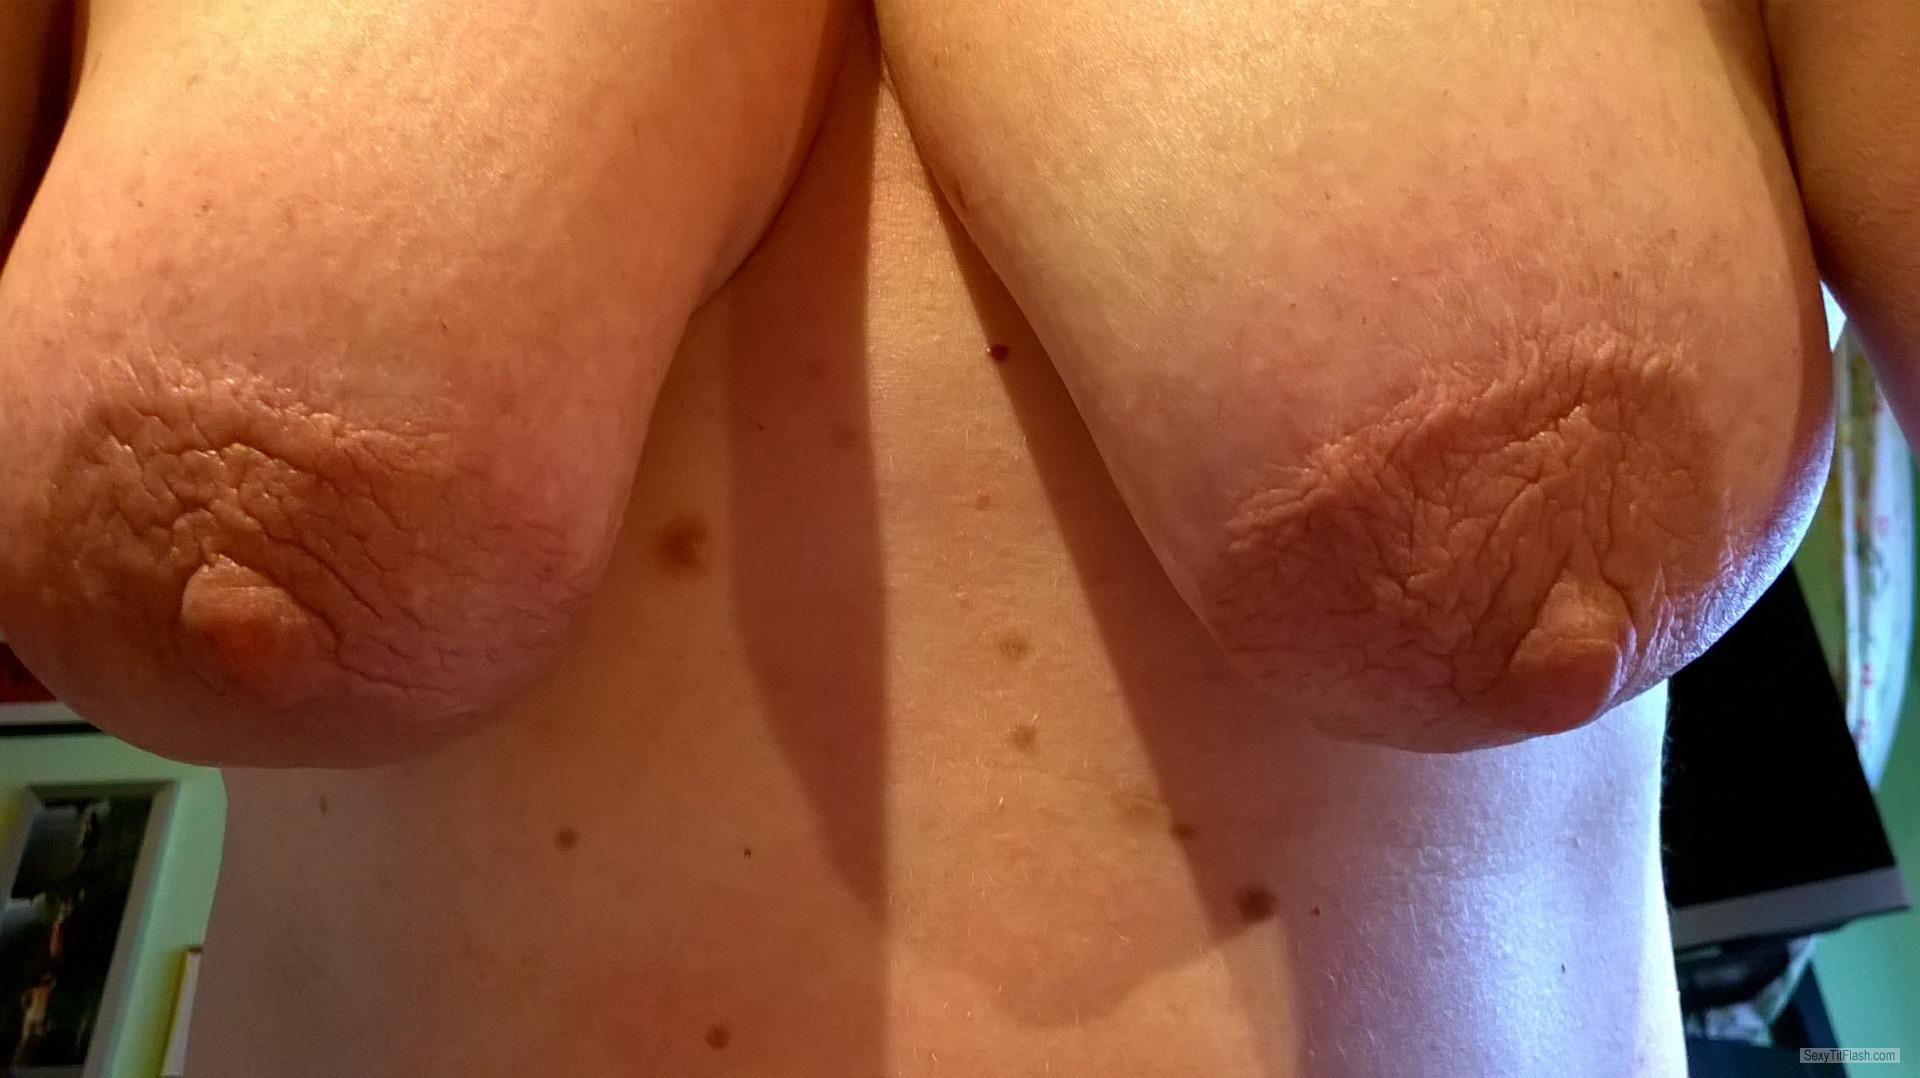 Tit Flash: My Medium Tits - Topless Susi from Germany